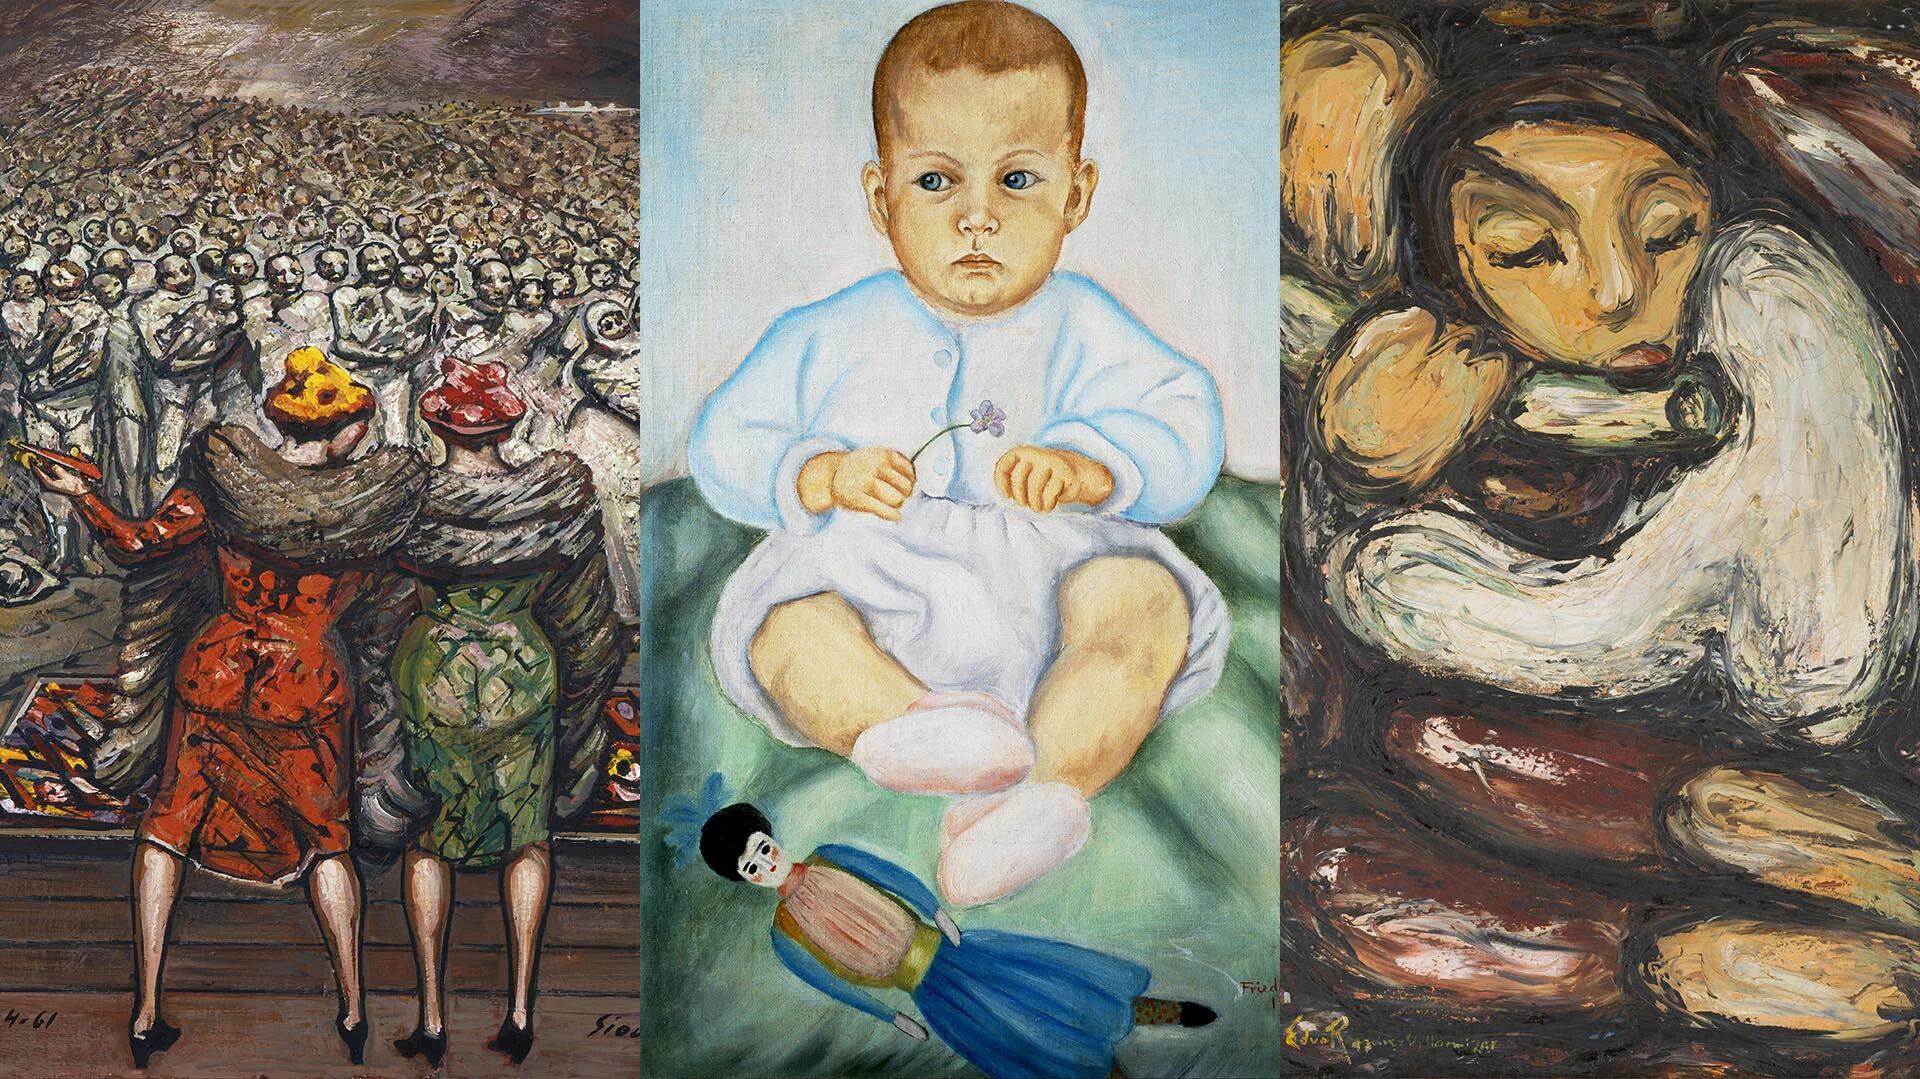 Obras de: David Alfaro Siqueiros “Entrega de juguetes” (1961) – Frida Kahlo “Retrato de Isolda Pinedo Kahlo” (1929) y Eduardo Ramirez Villamizar Angel flautista, (s.f)